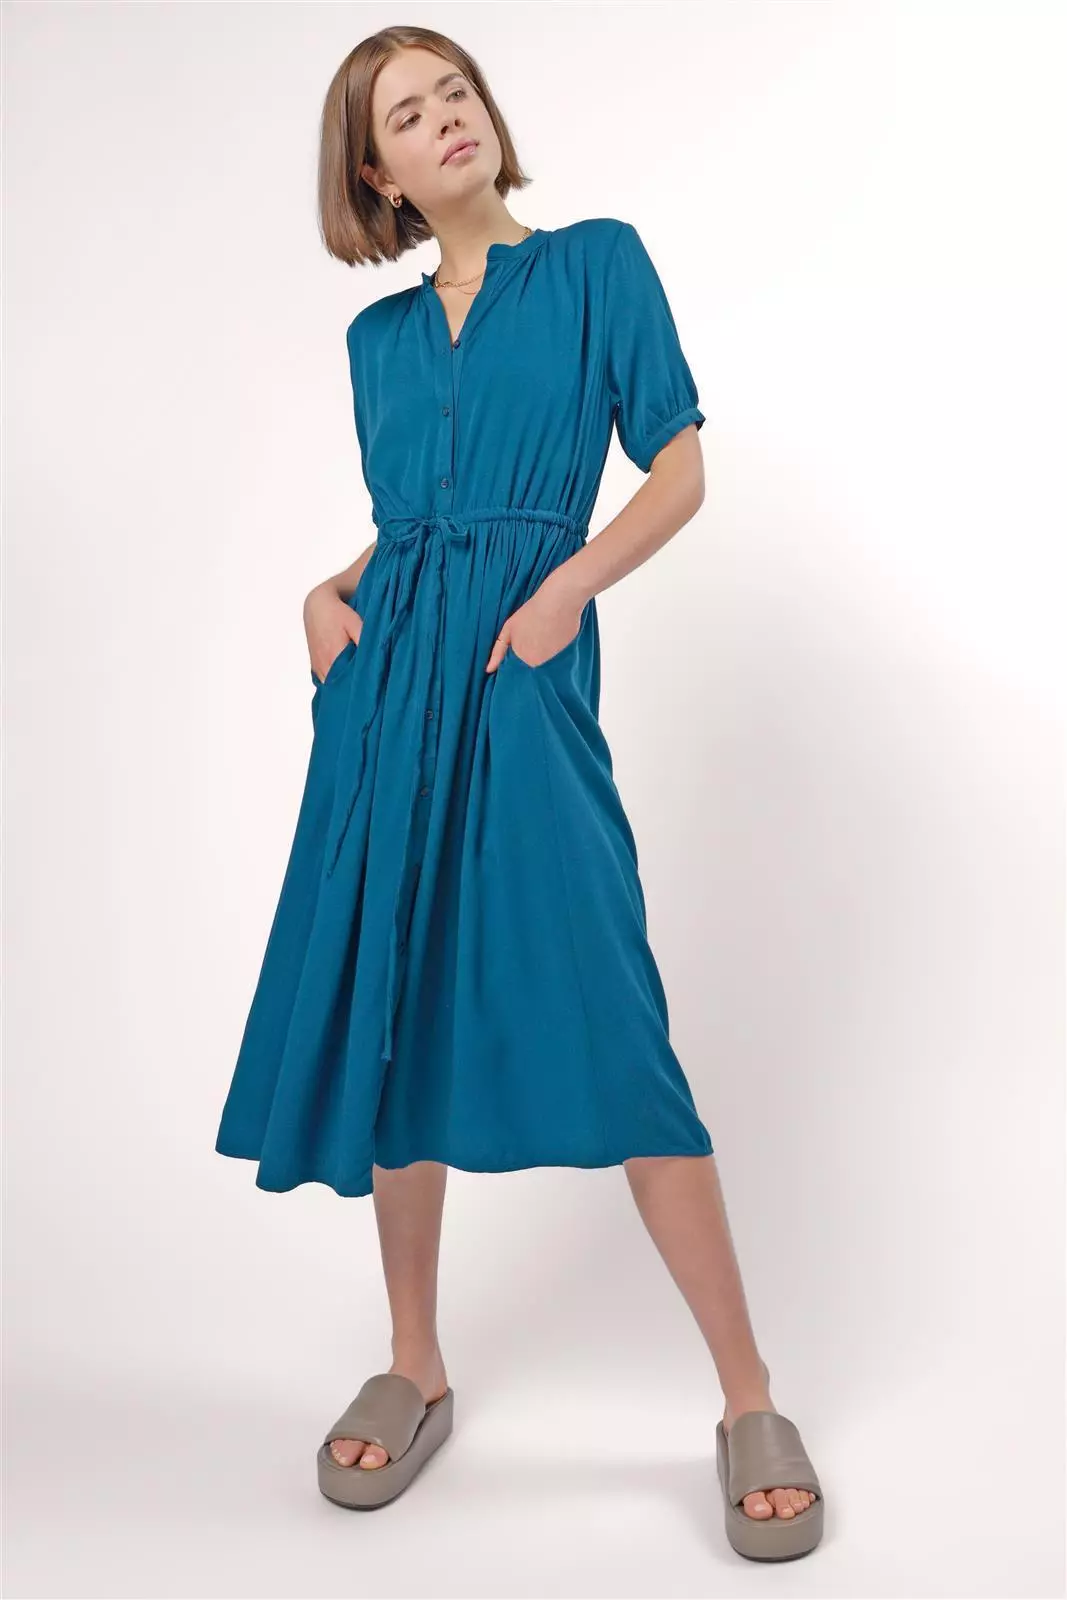 Blusen-Kleid Modell: Feaina